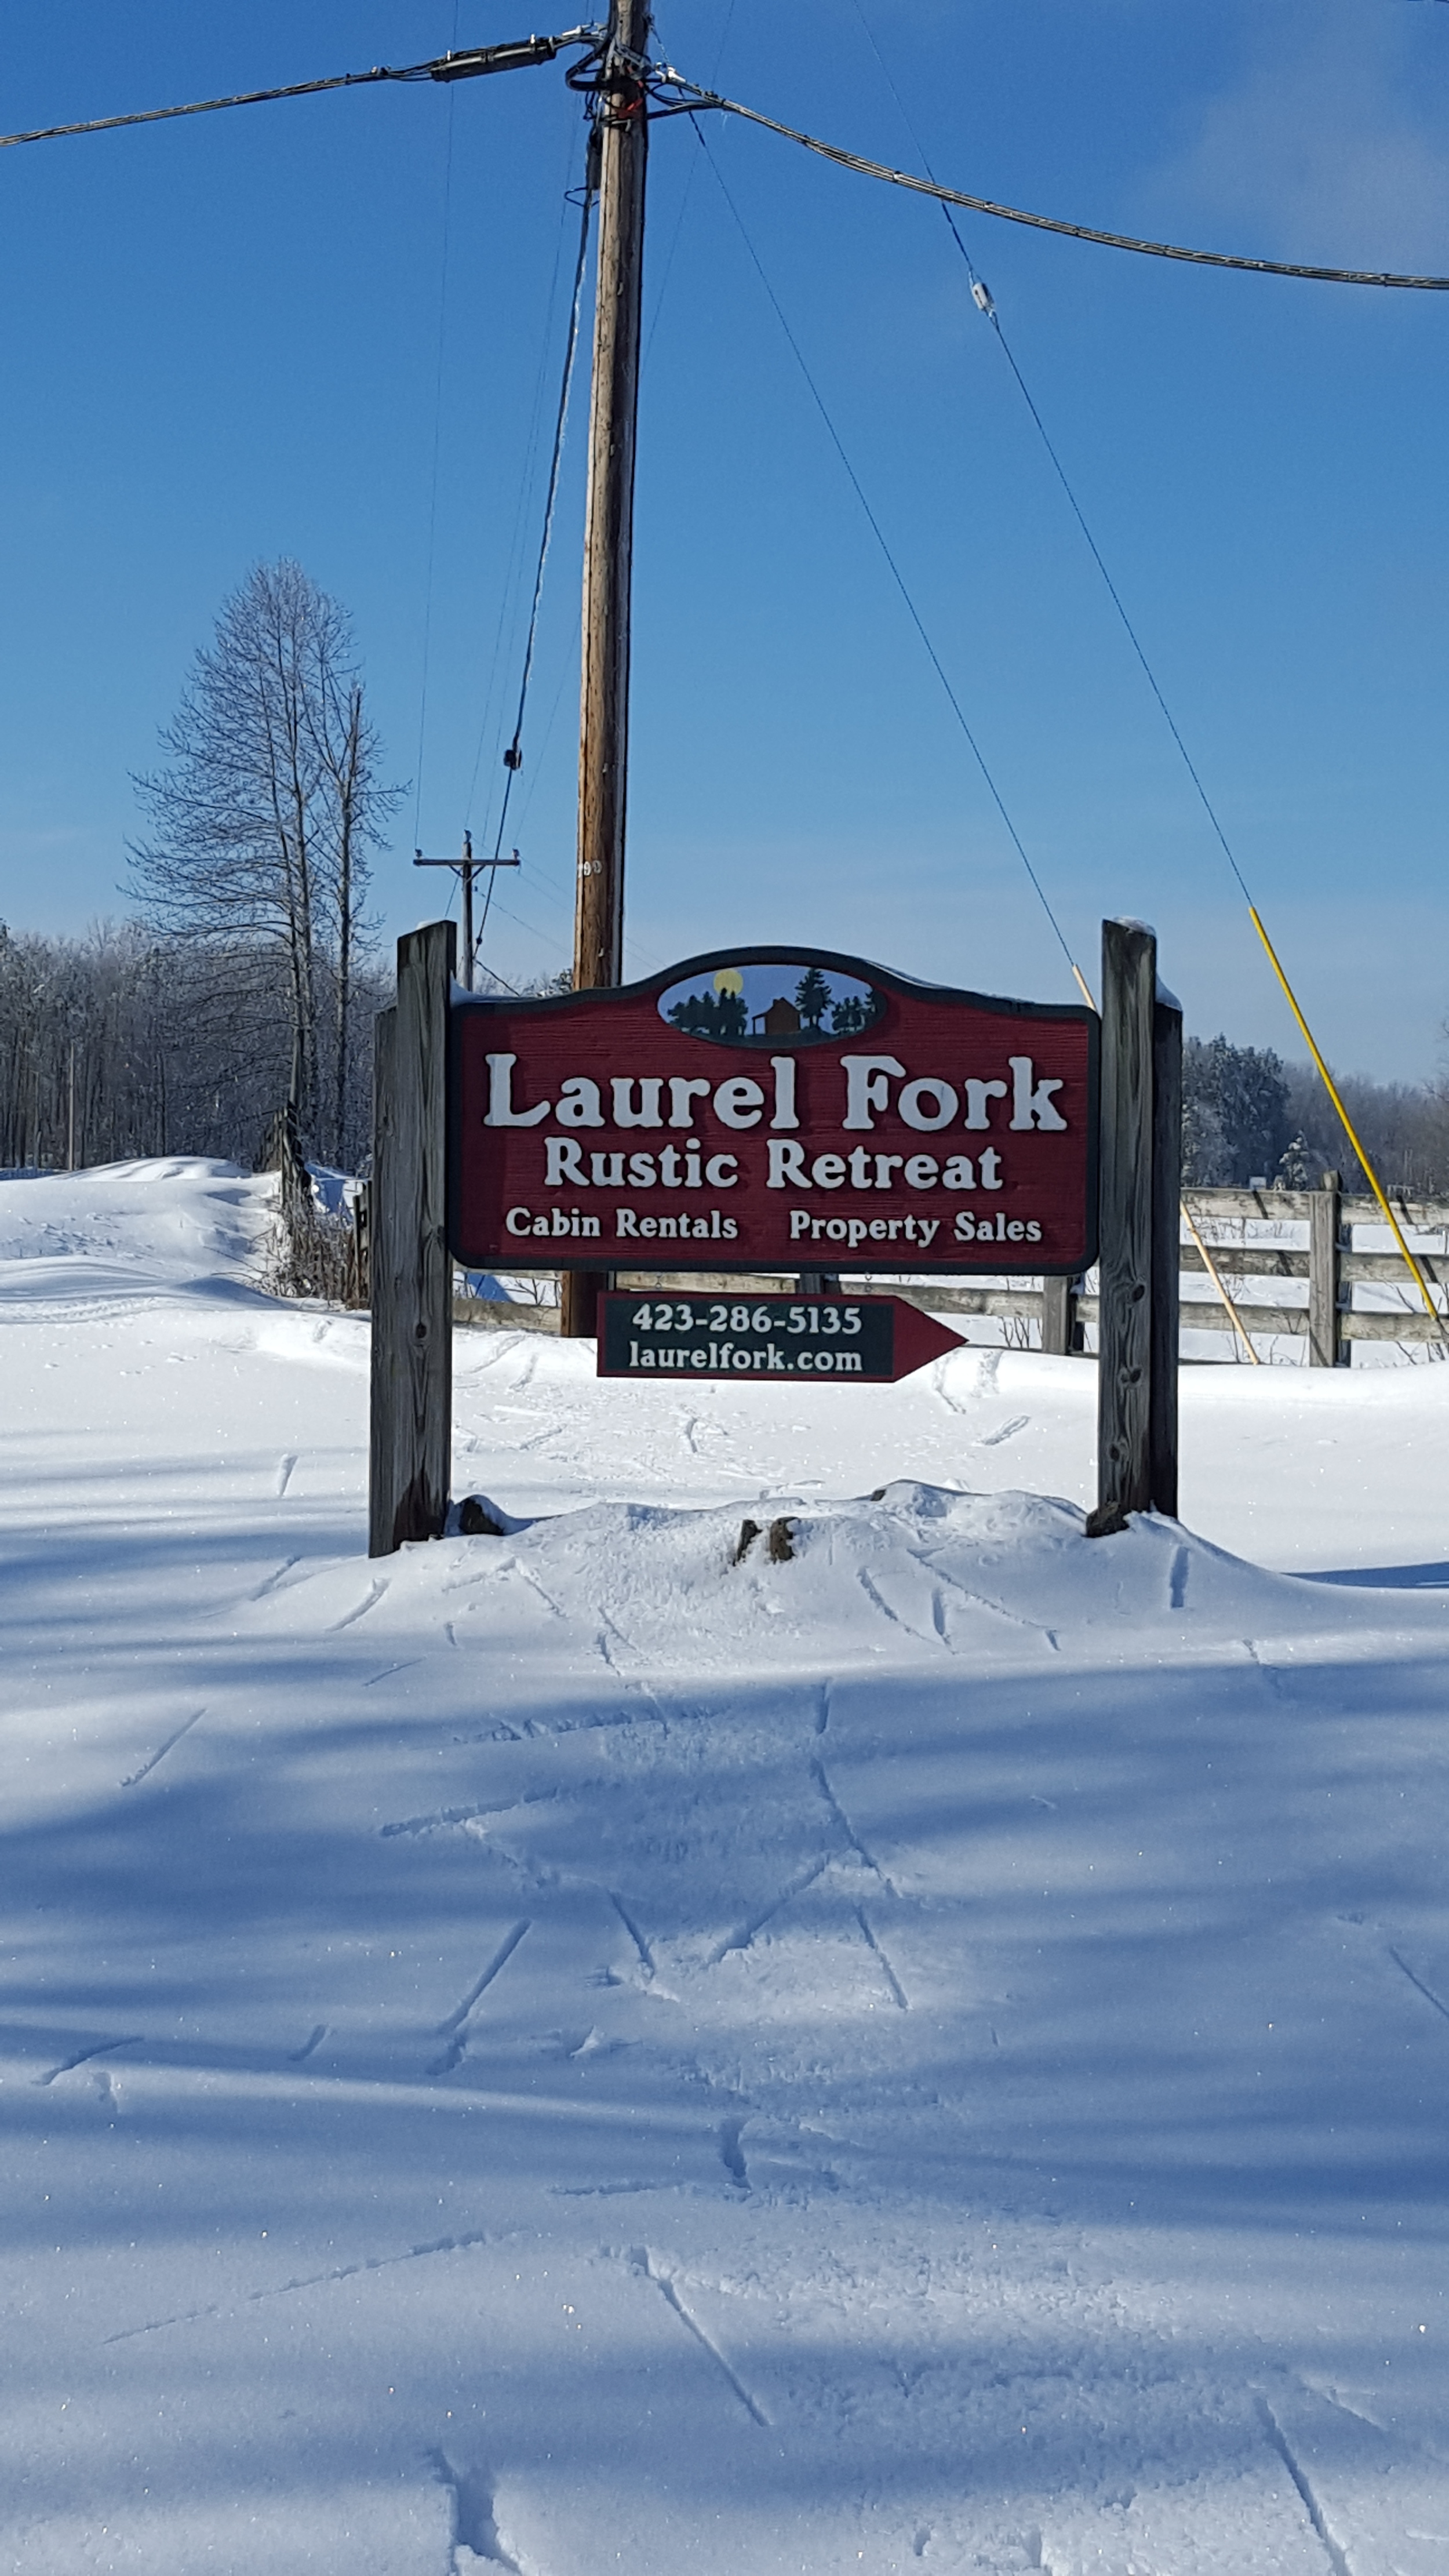 Snowy Laurel Fork Rustic Retreat sign